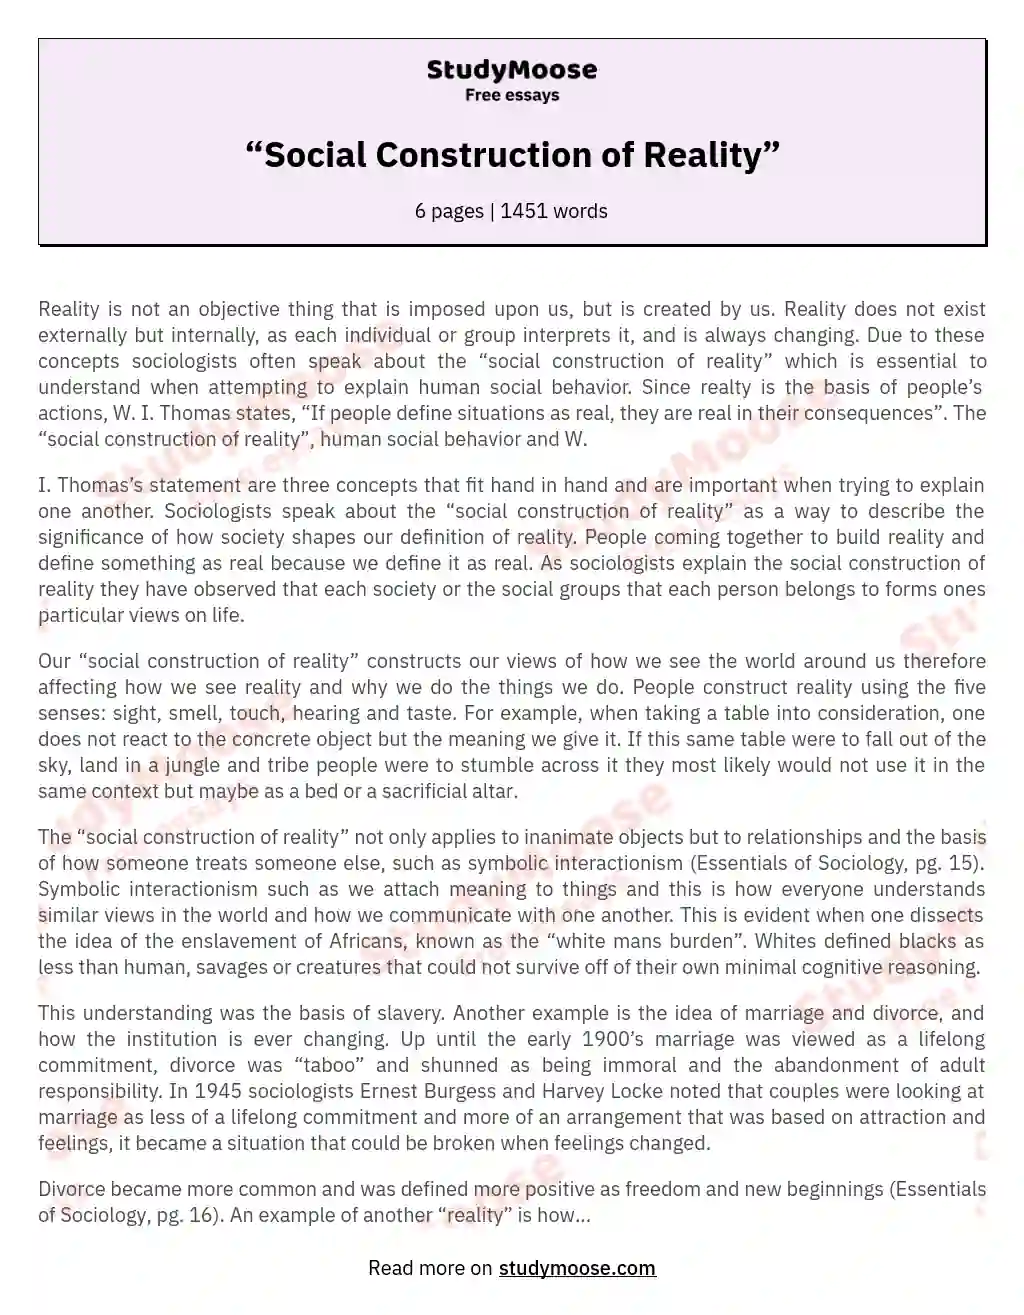 “Social Construction of Reality” essay